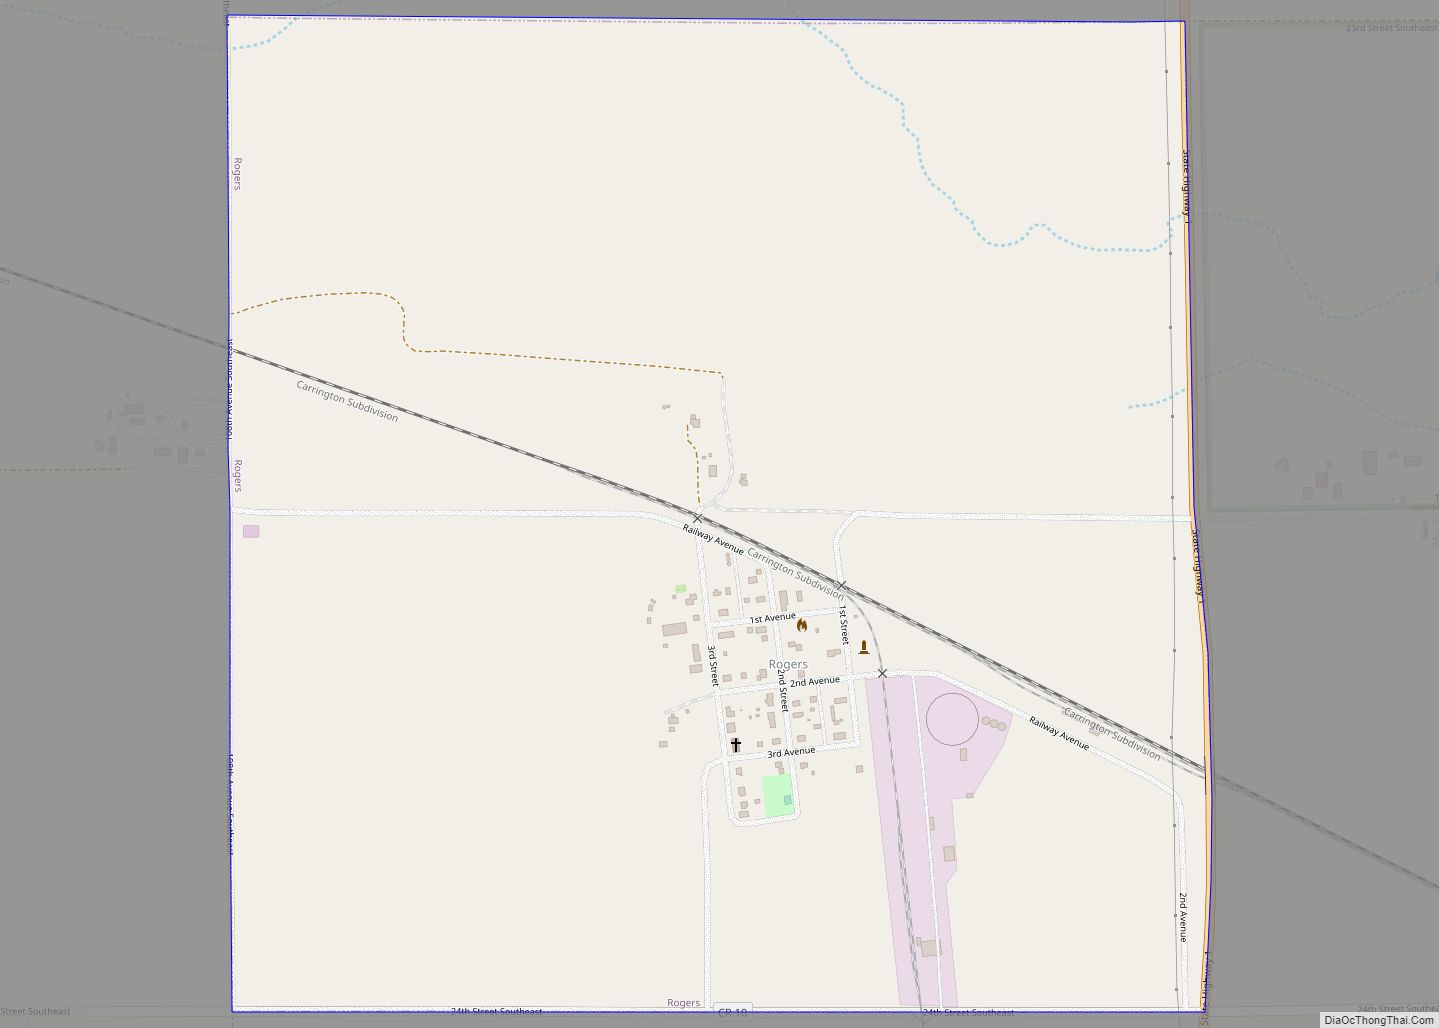 Map of Rogers city, North Dakota